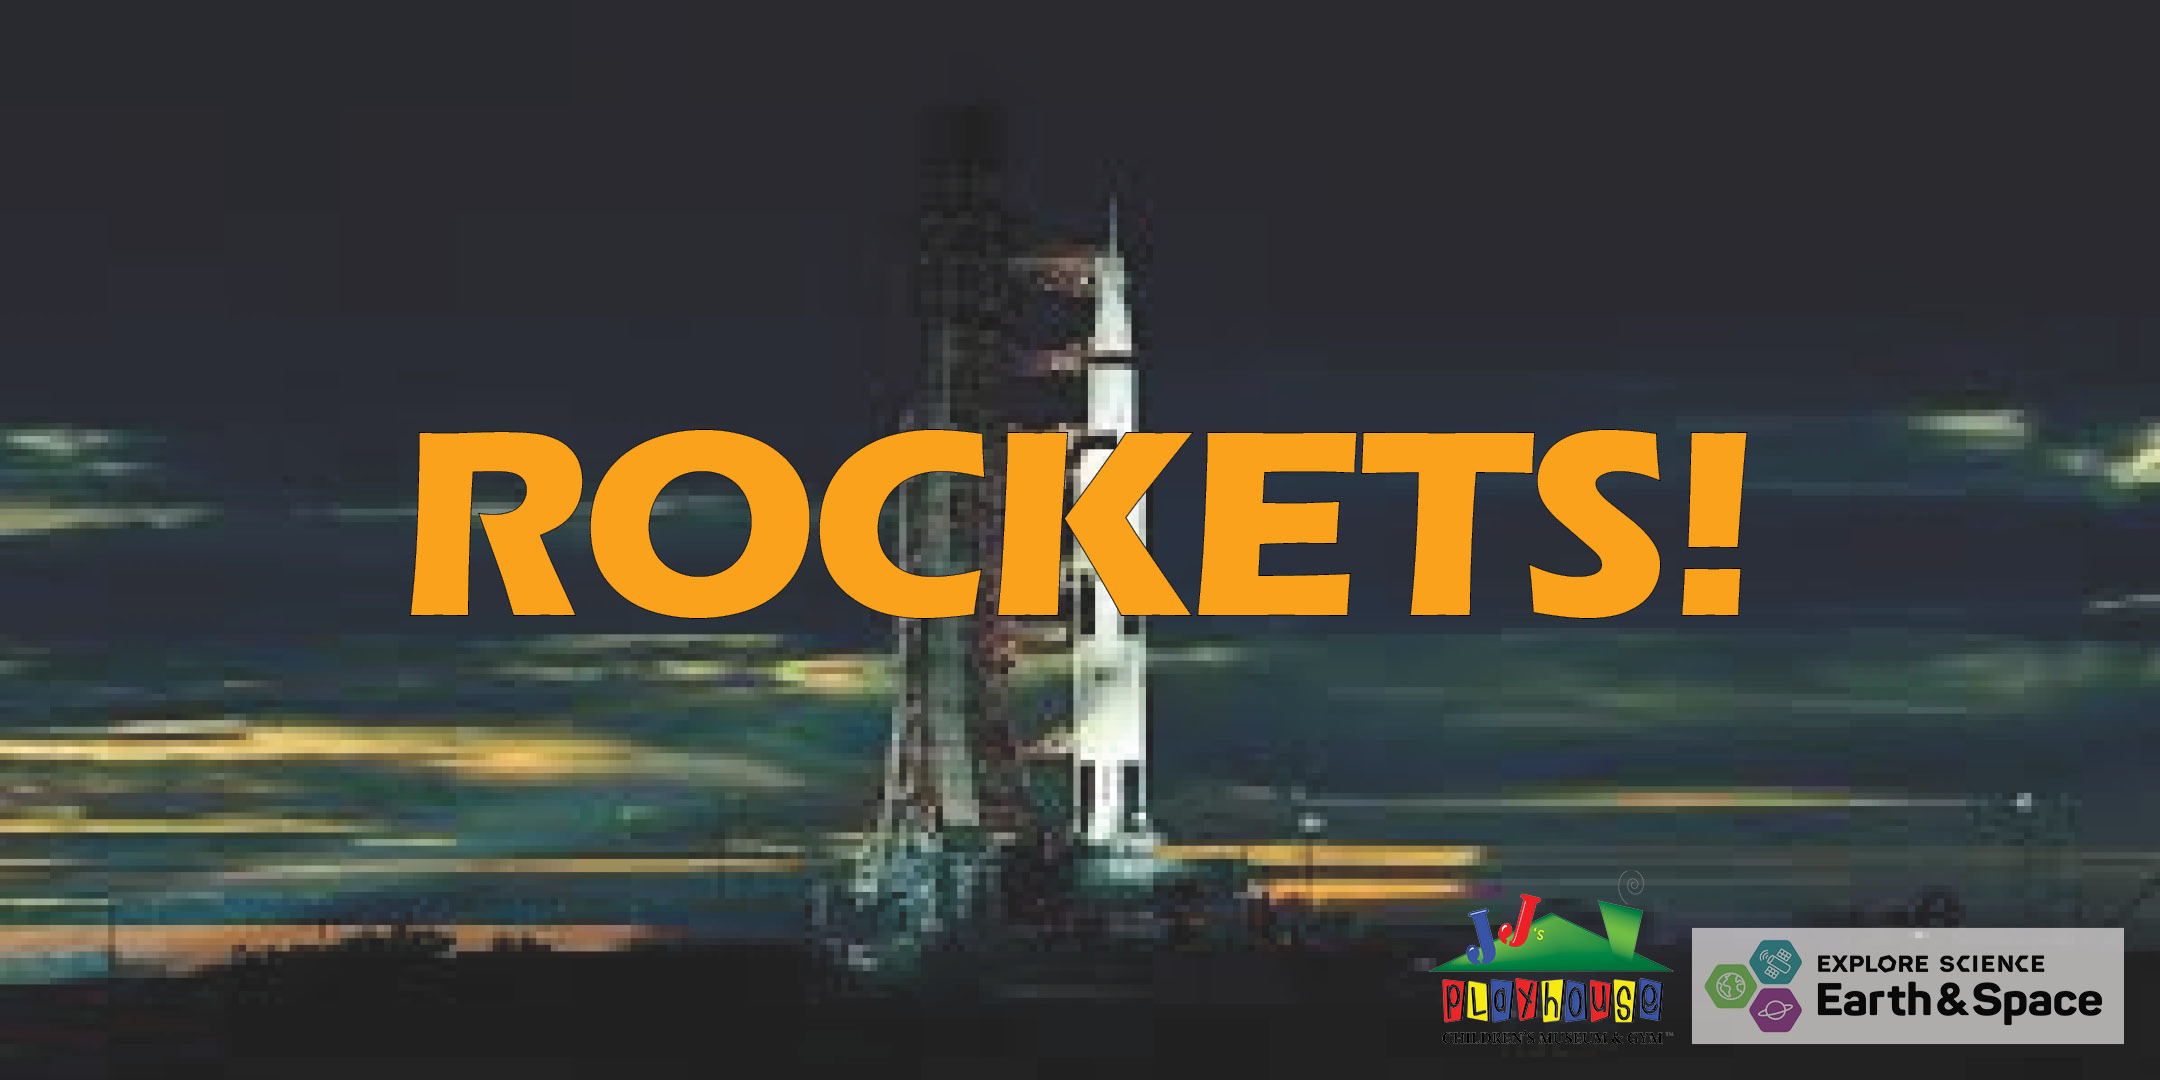 Rockets!